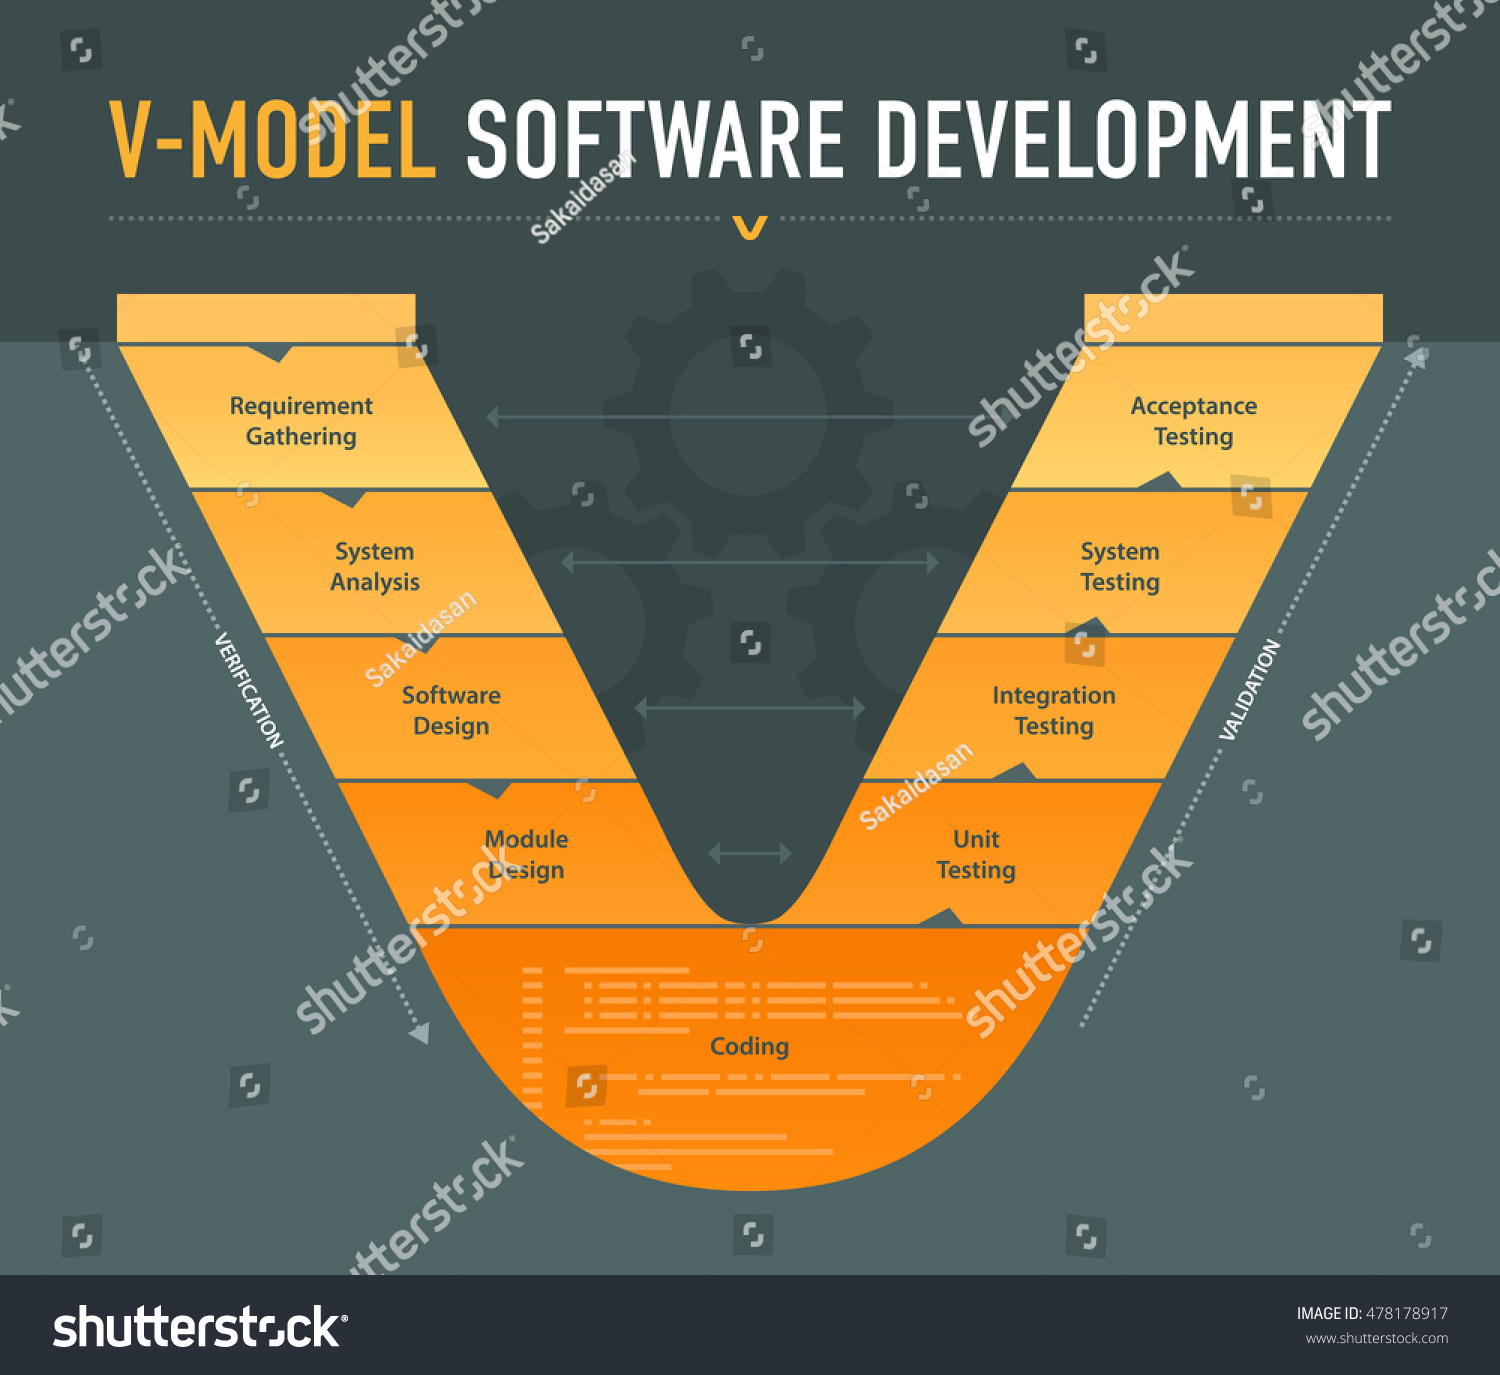 V-model software development scheme - Royalty Free Stock Vector ...